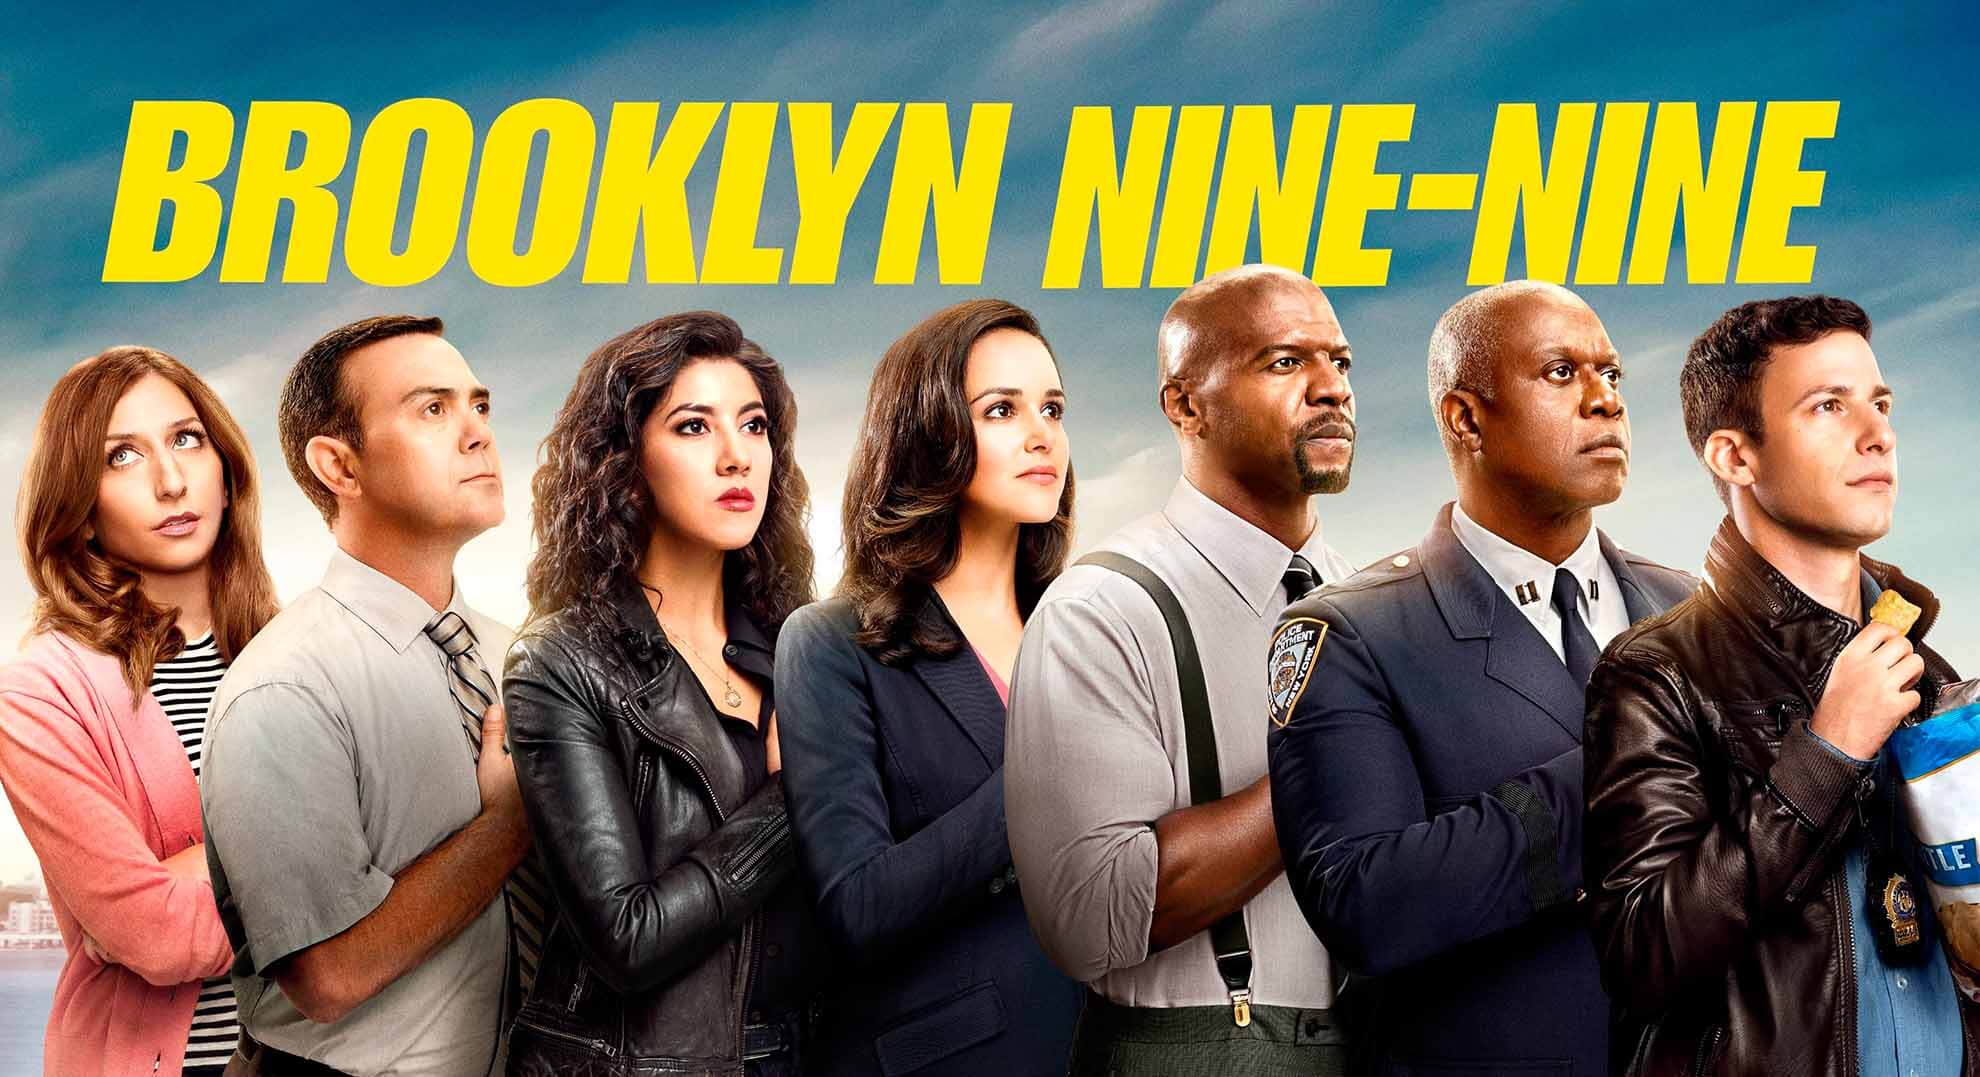 Brooklyn Nine-Nine Season 8 Cast and Plot Spoilers